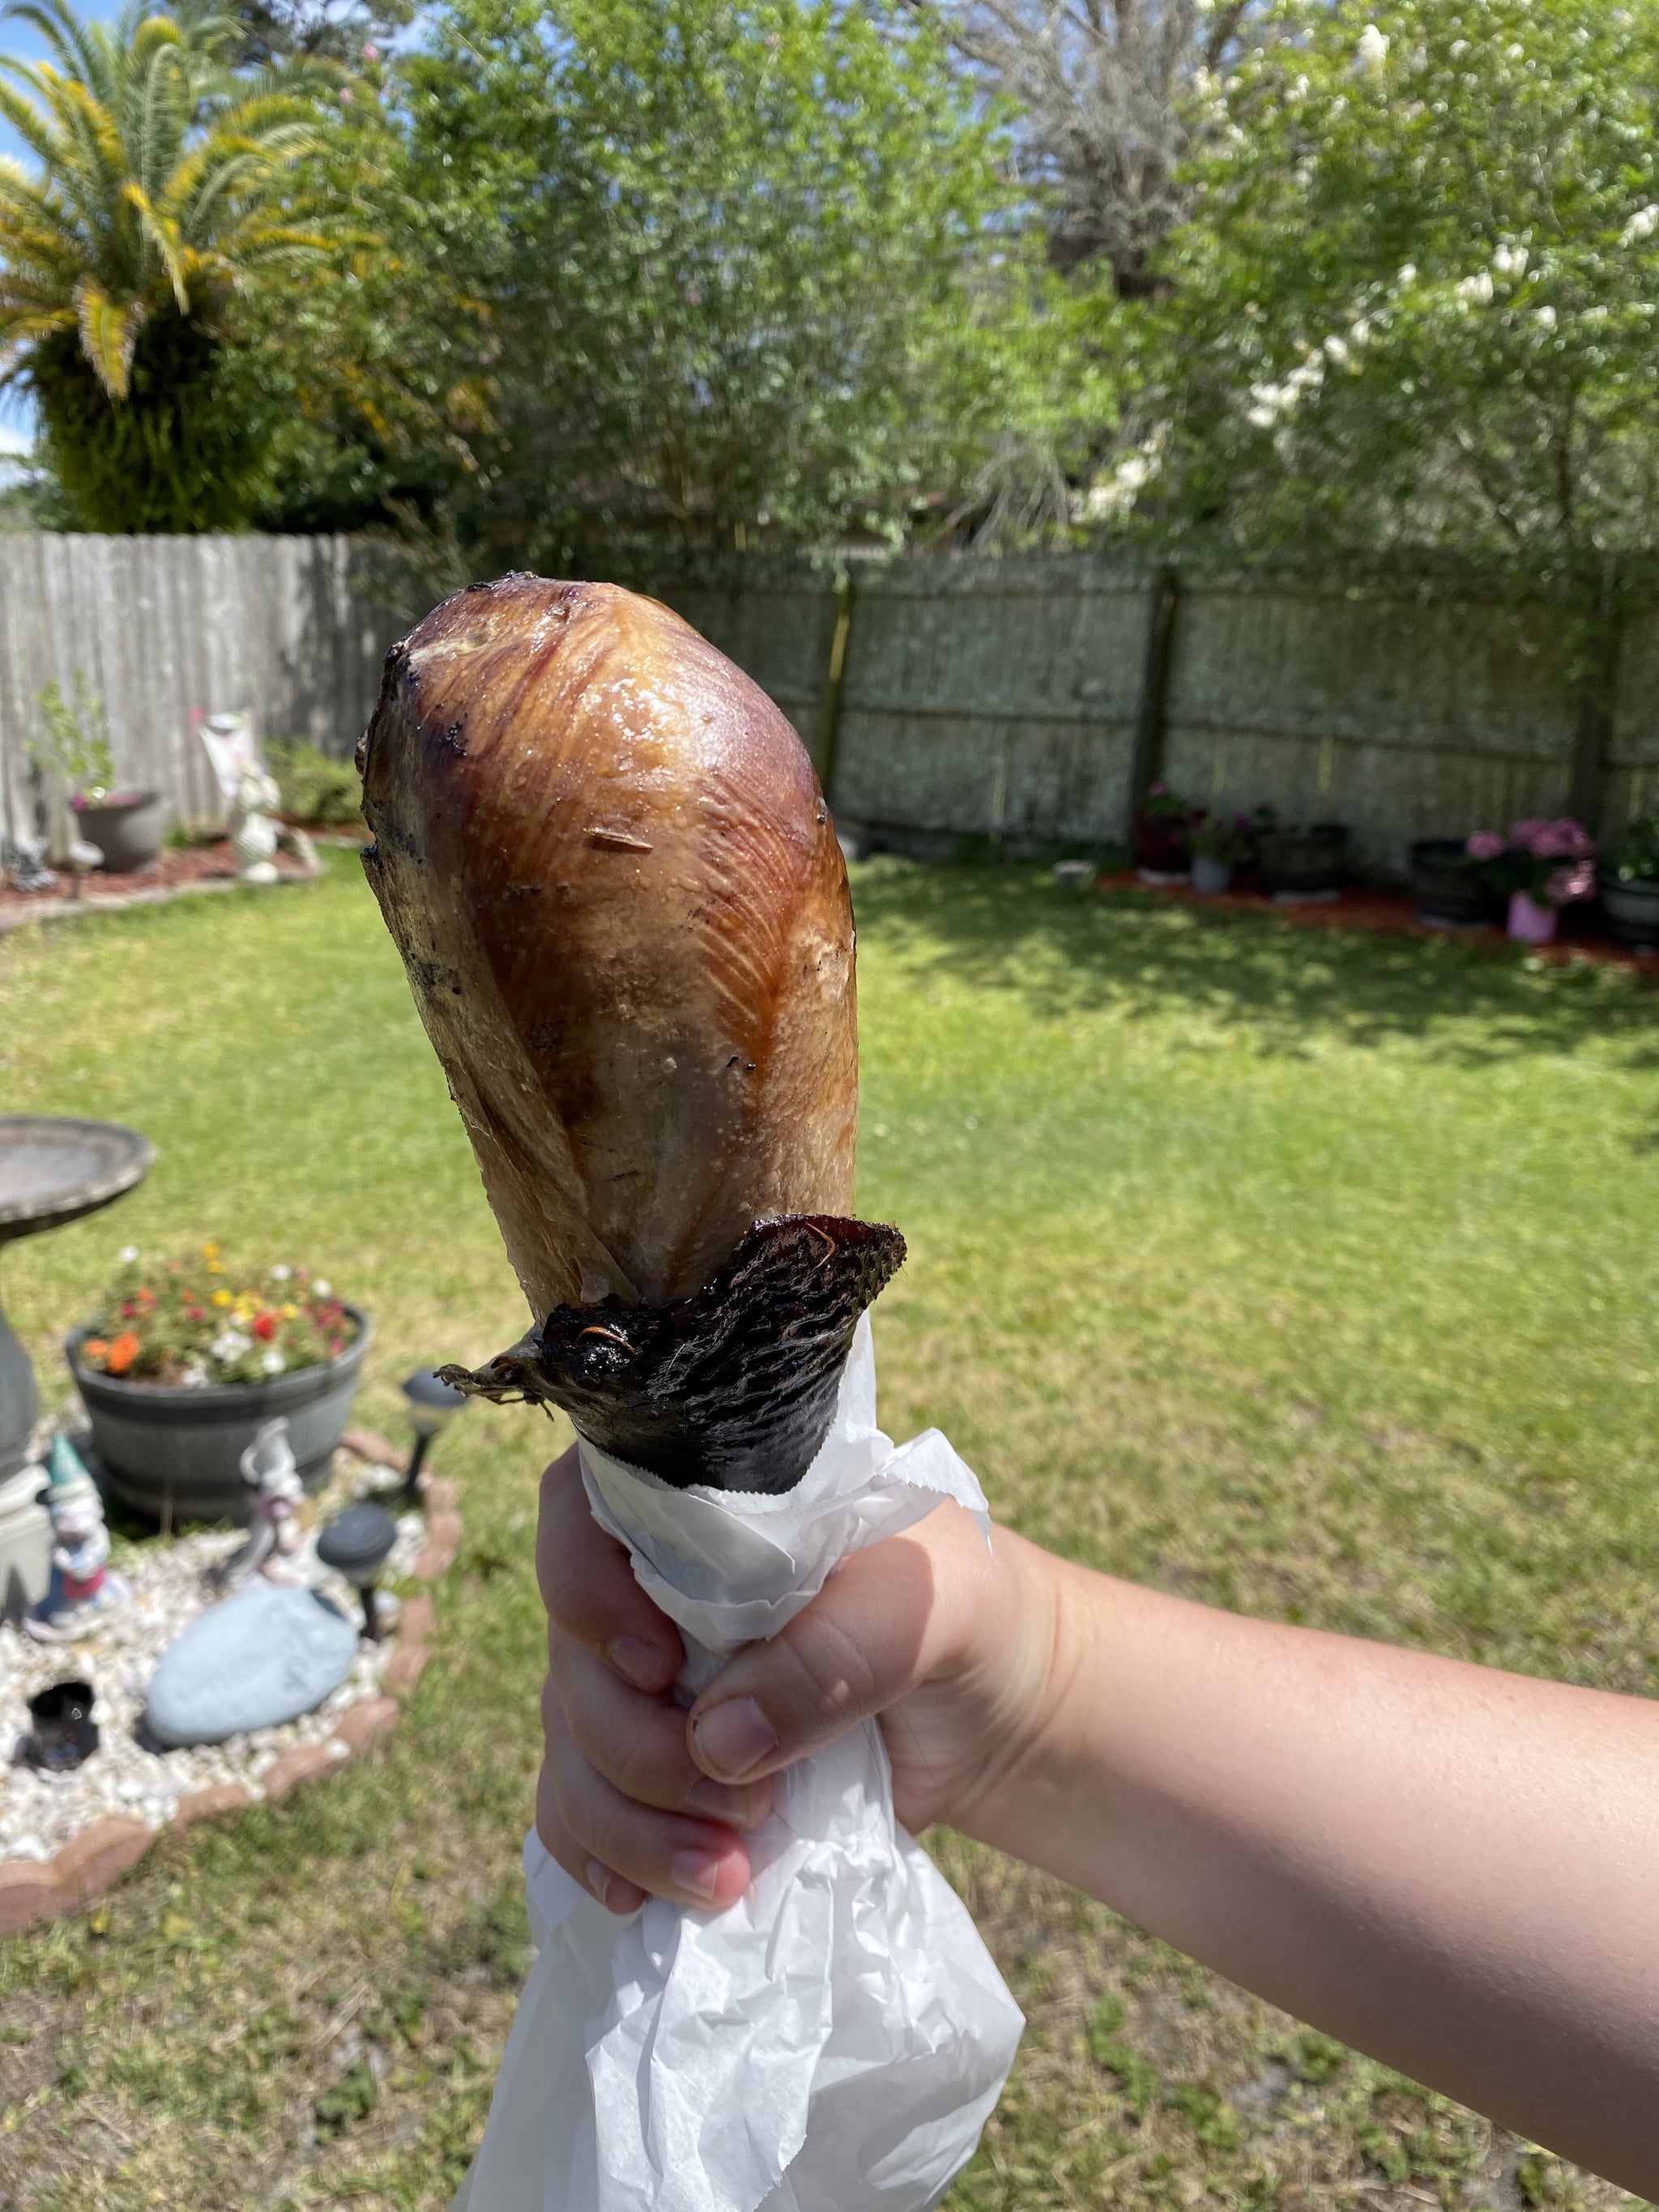 Copycat Disney Turkey Leg Recipe With Photos | POPSUGAR Food